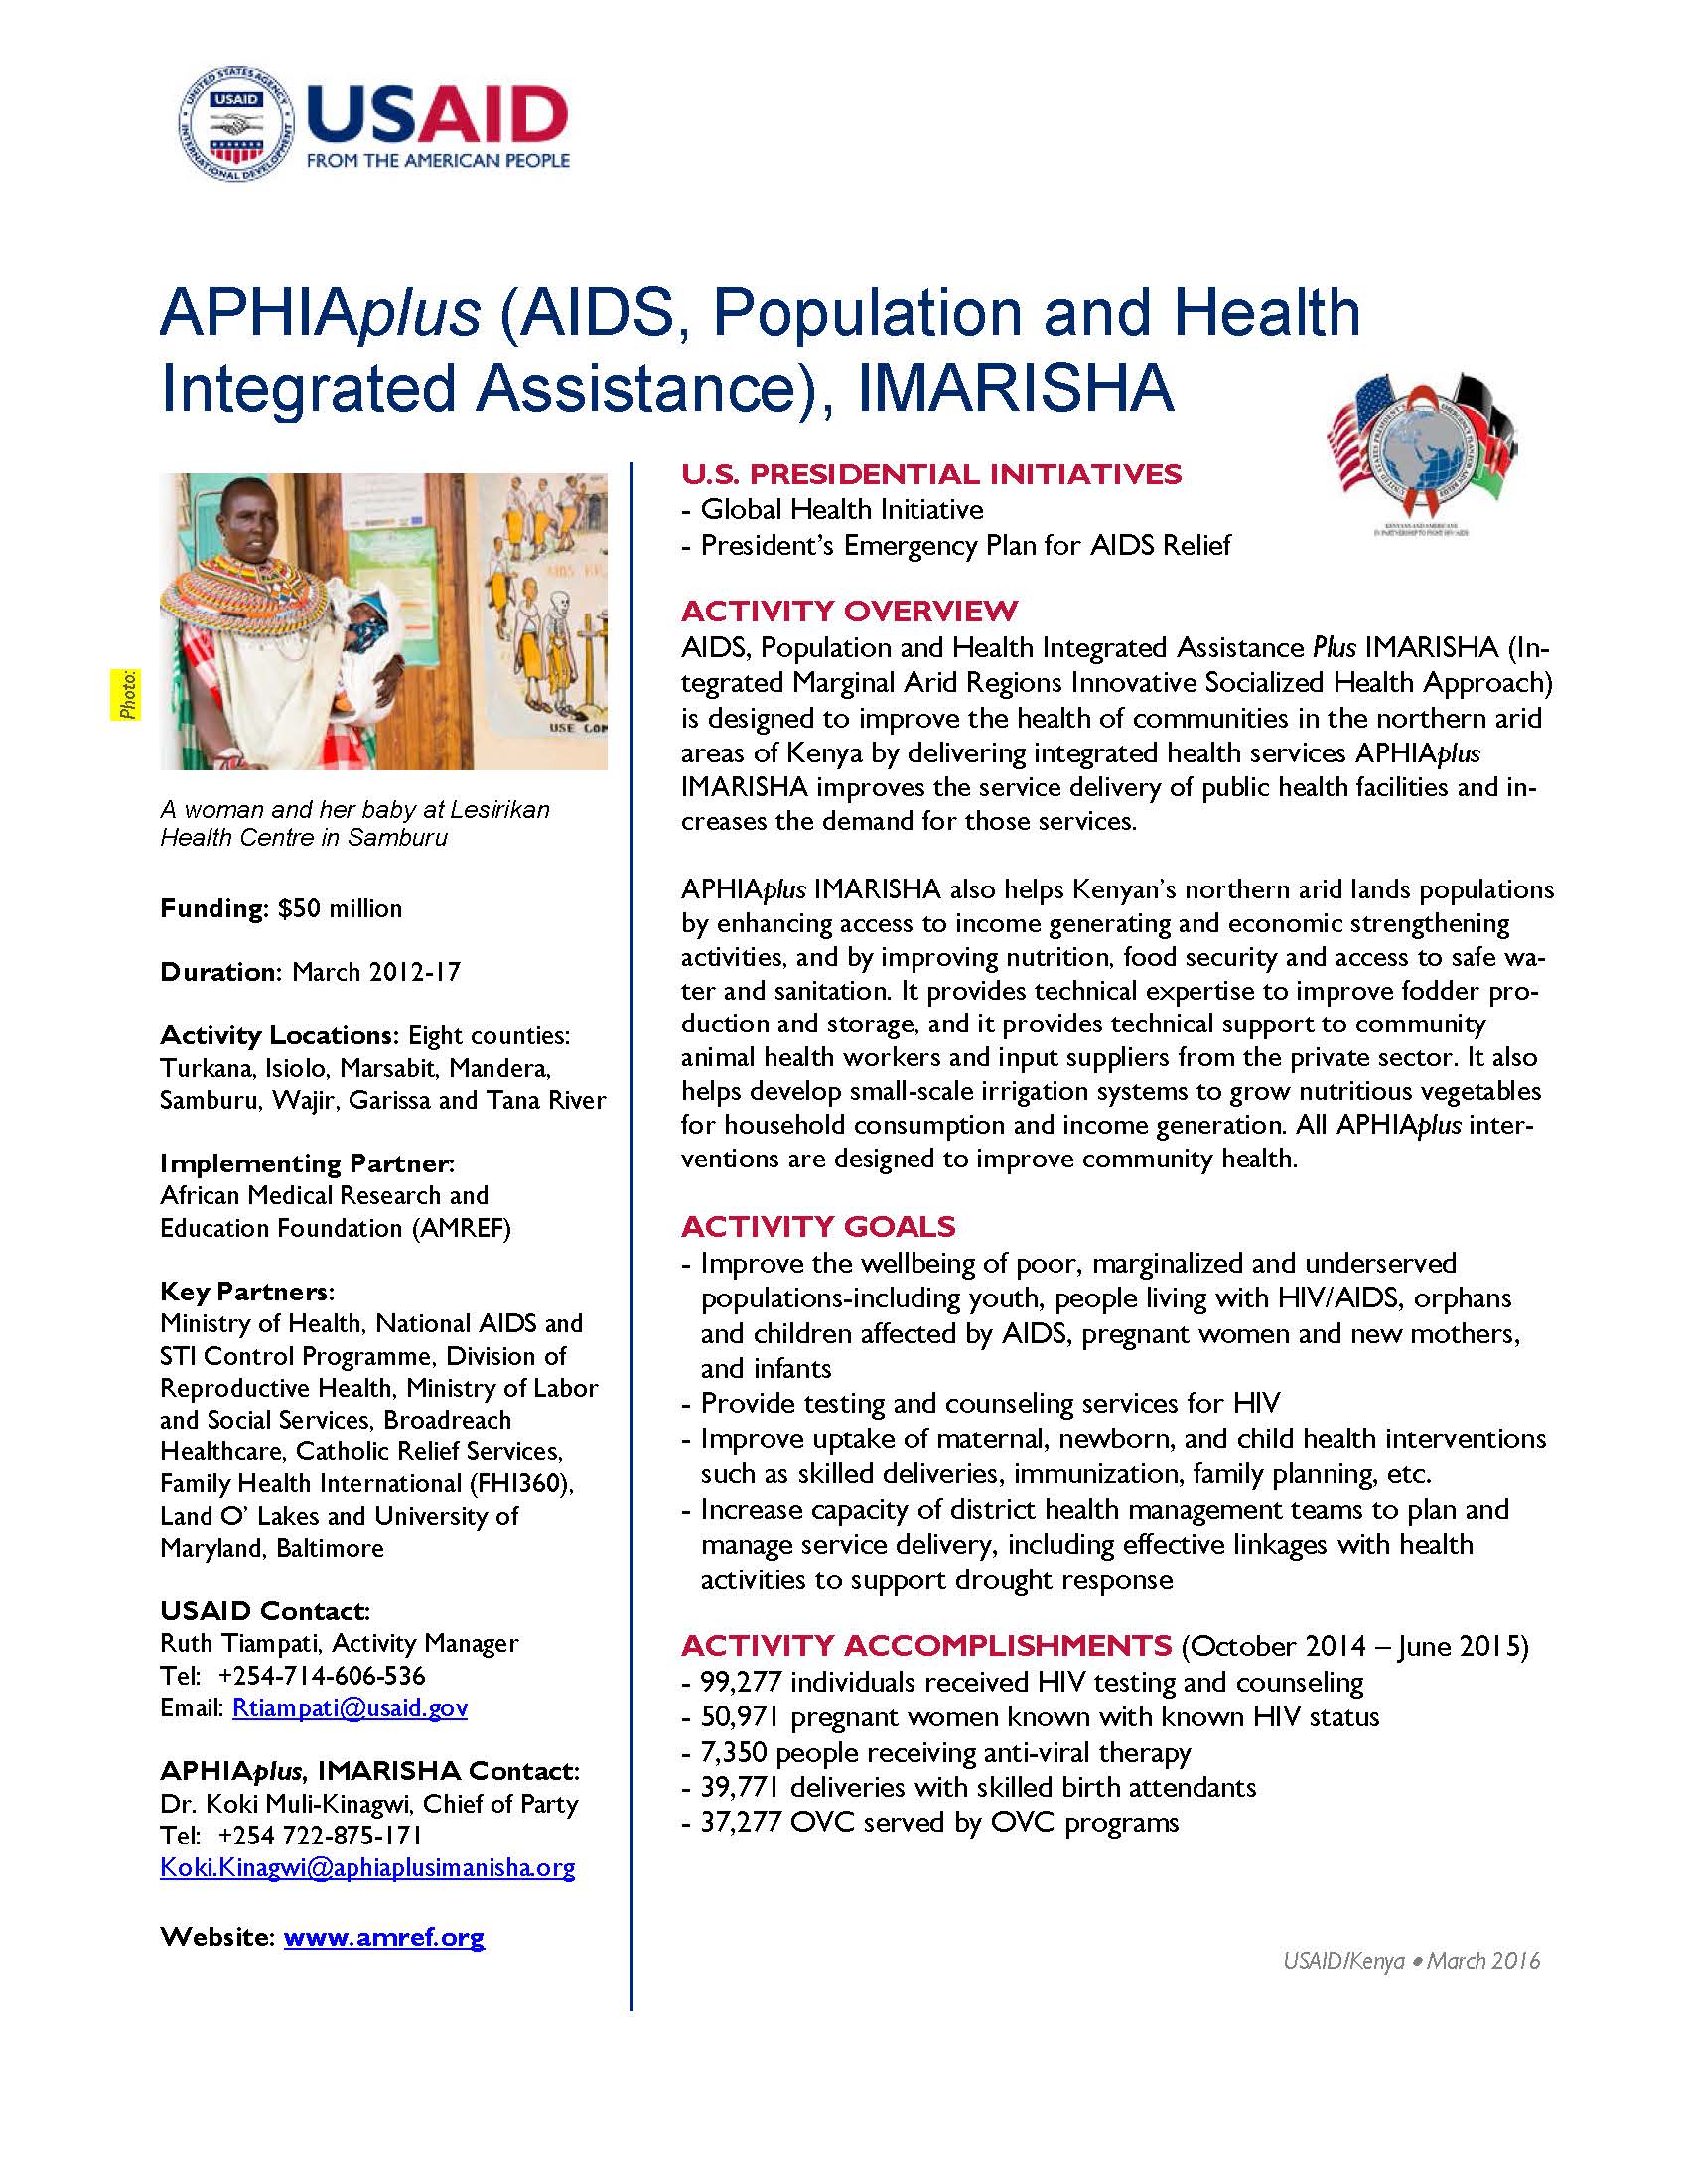 APHIAplus (AIDS, Population and Health Integrated Assistance), IMARISHA